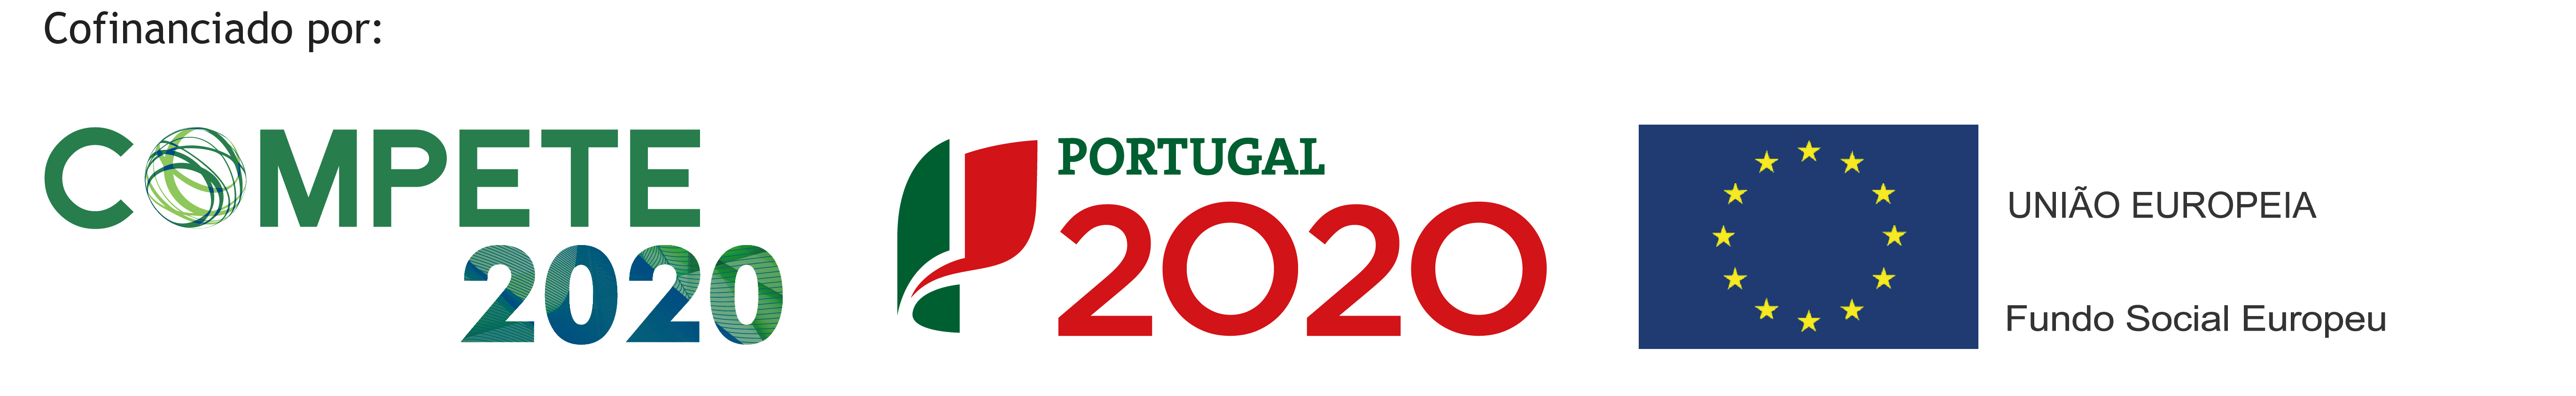 Compete 2020 - Fundo Social Europeu